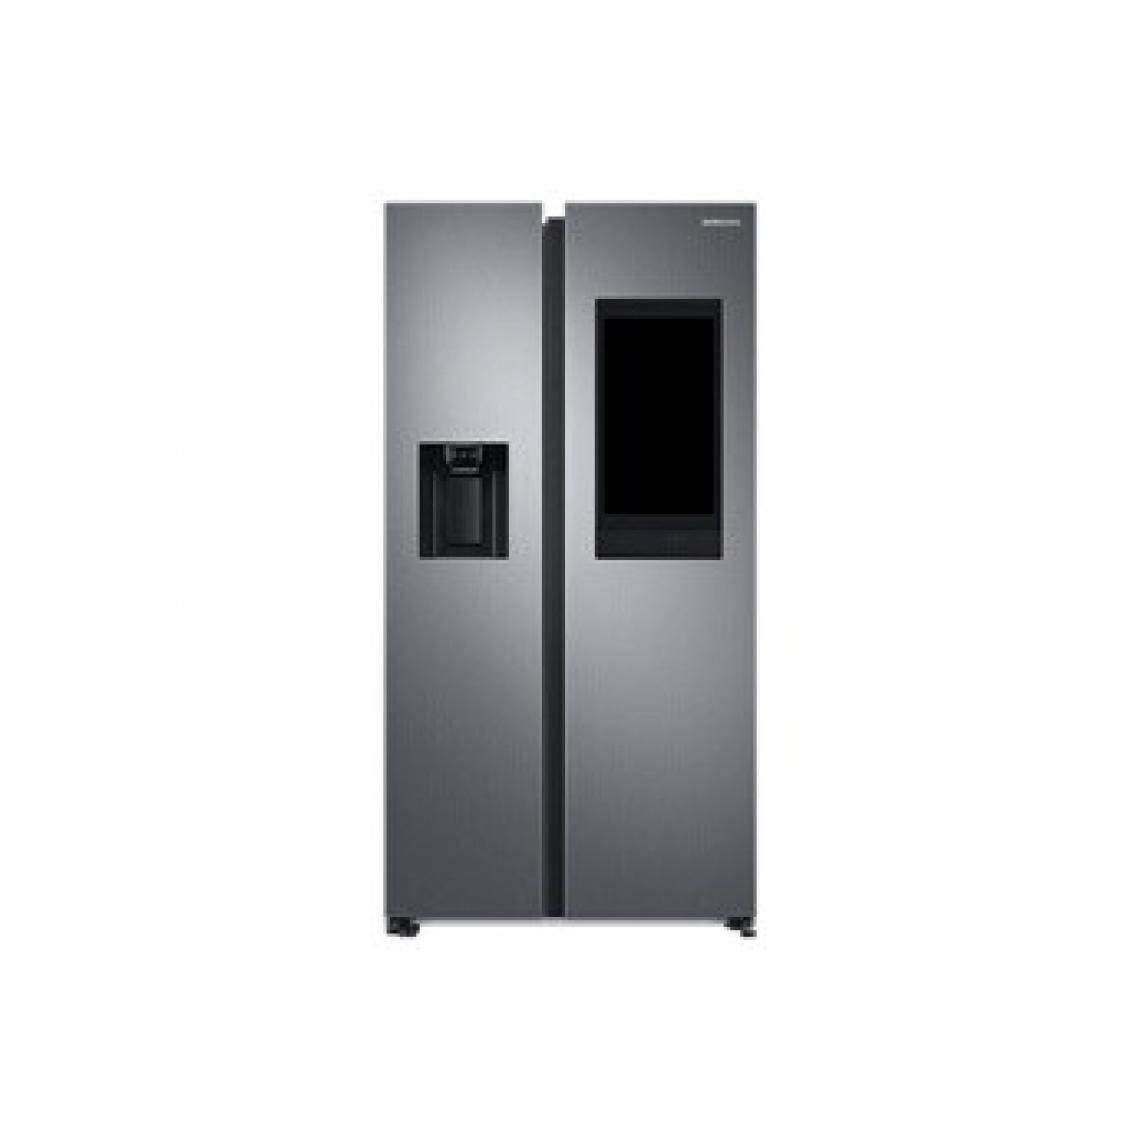 Samsung - Refrigerateur americain Samsung RS6HA8880S9 FAMILY HUB - Réfrigérateur américain